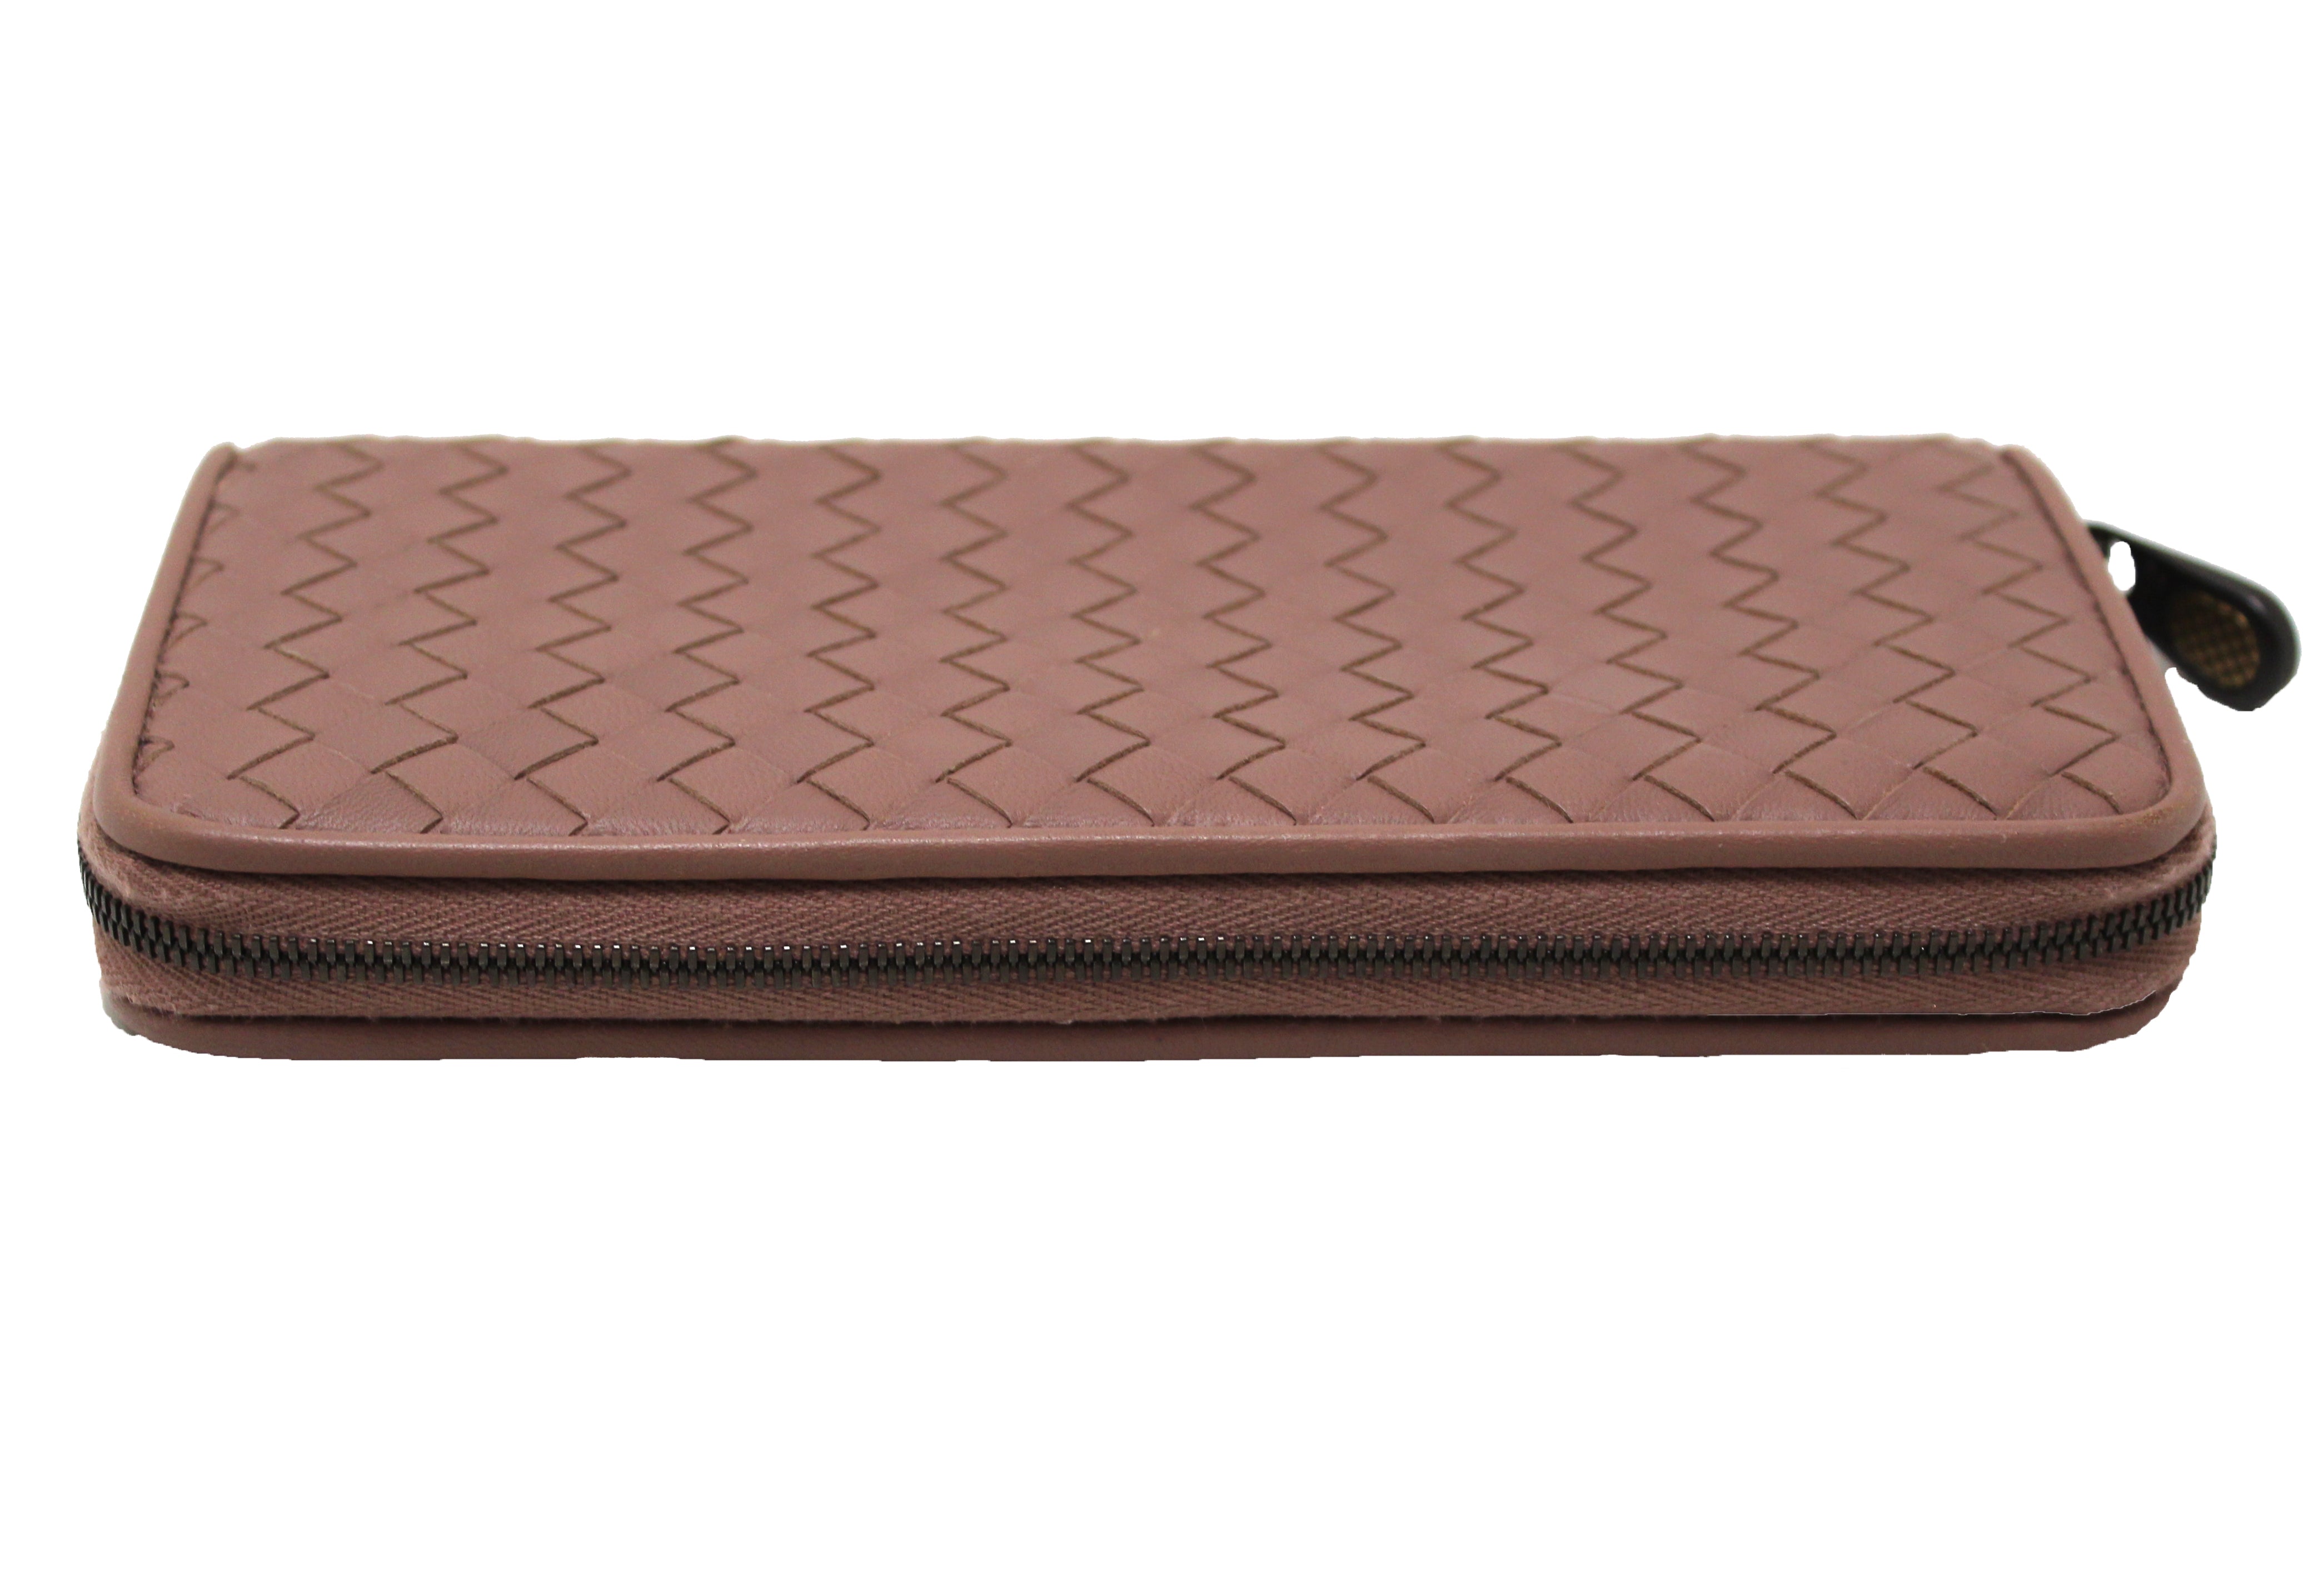 Bottega Veneta Bi-Colour Nappa Leather French Wallet 608263 V3964